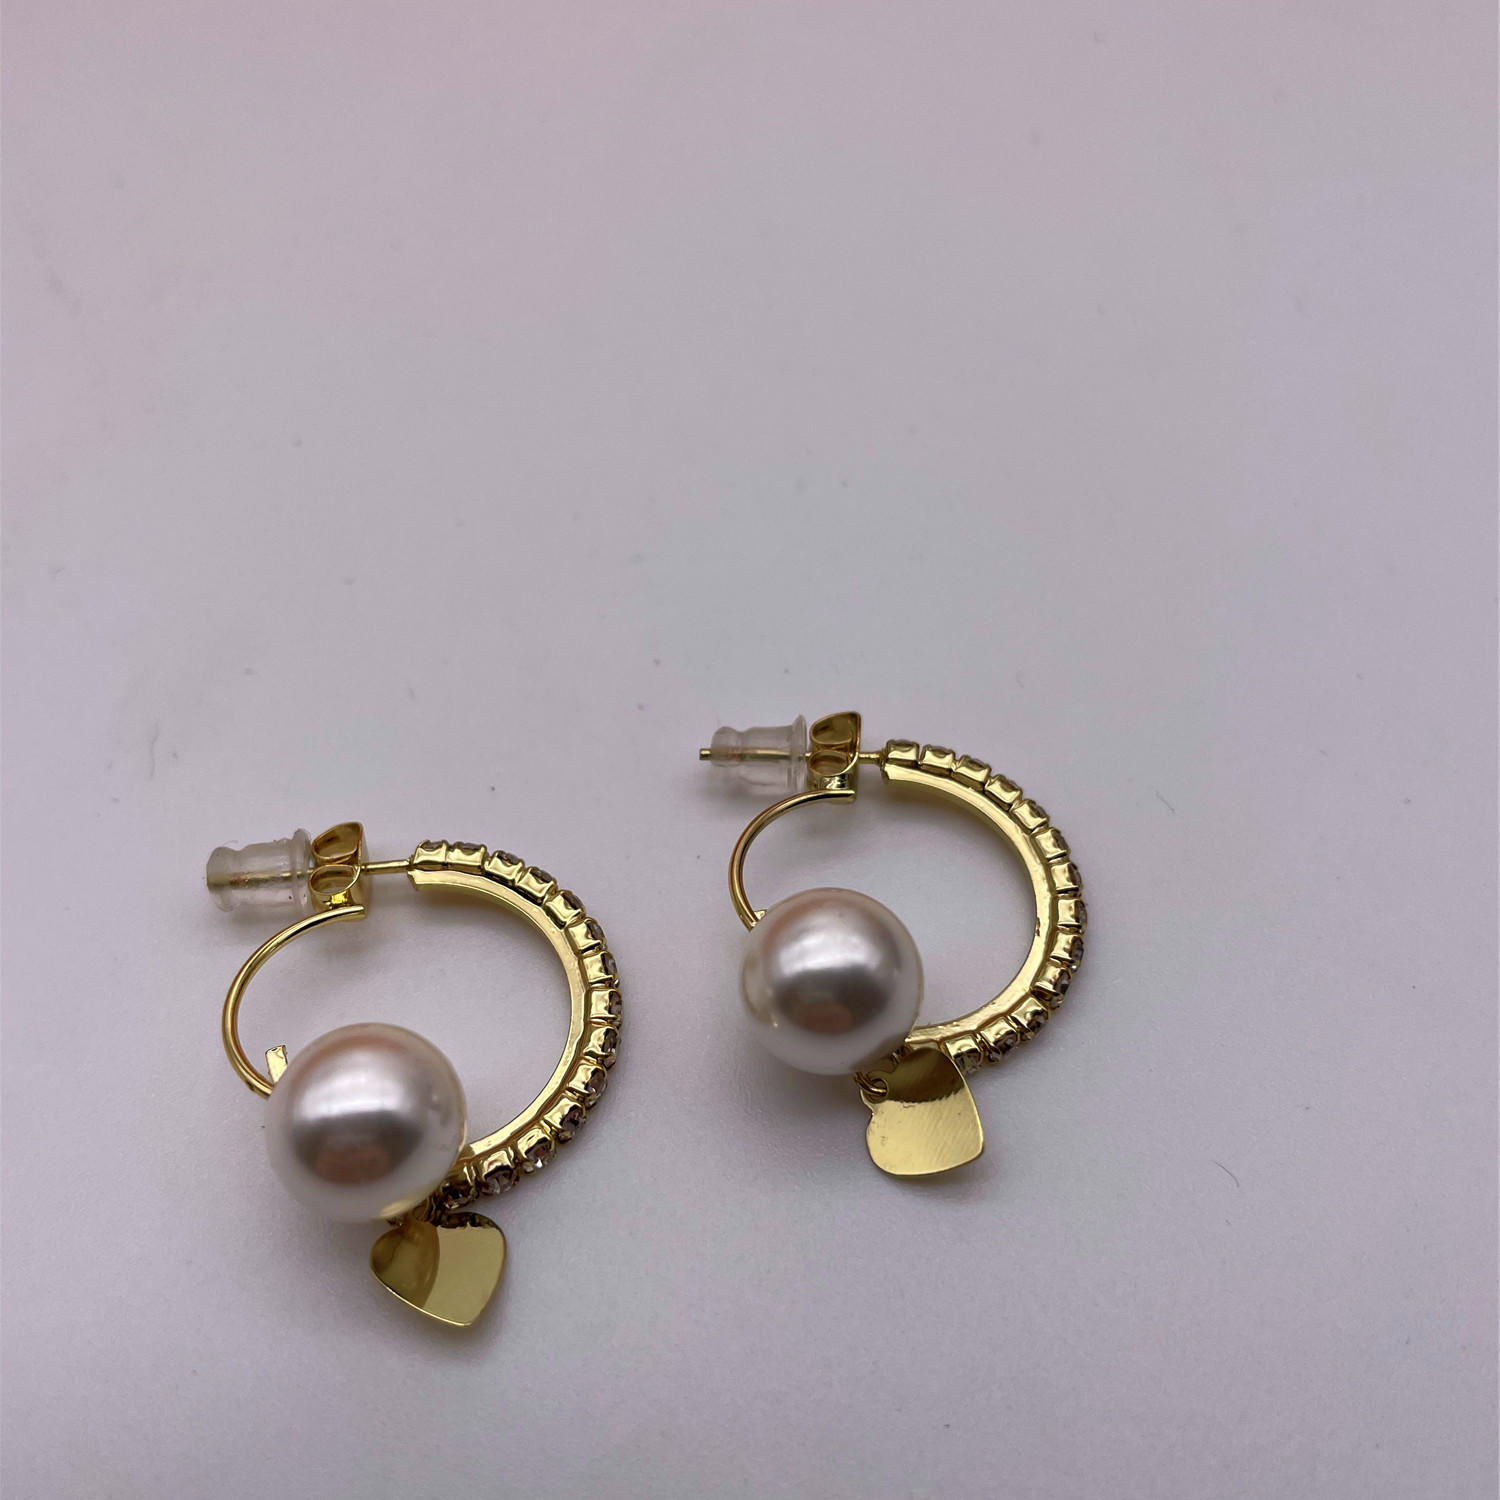 The circle earrings